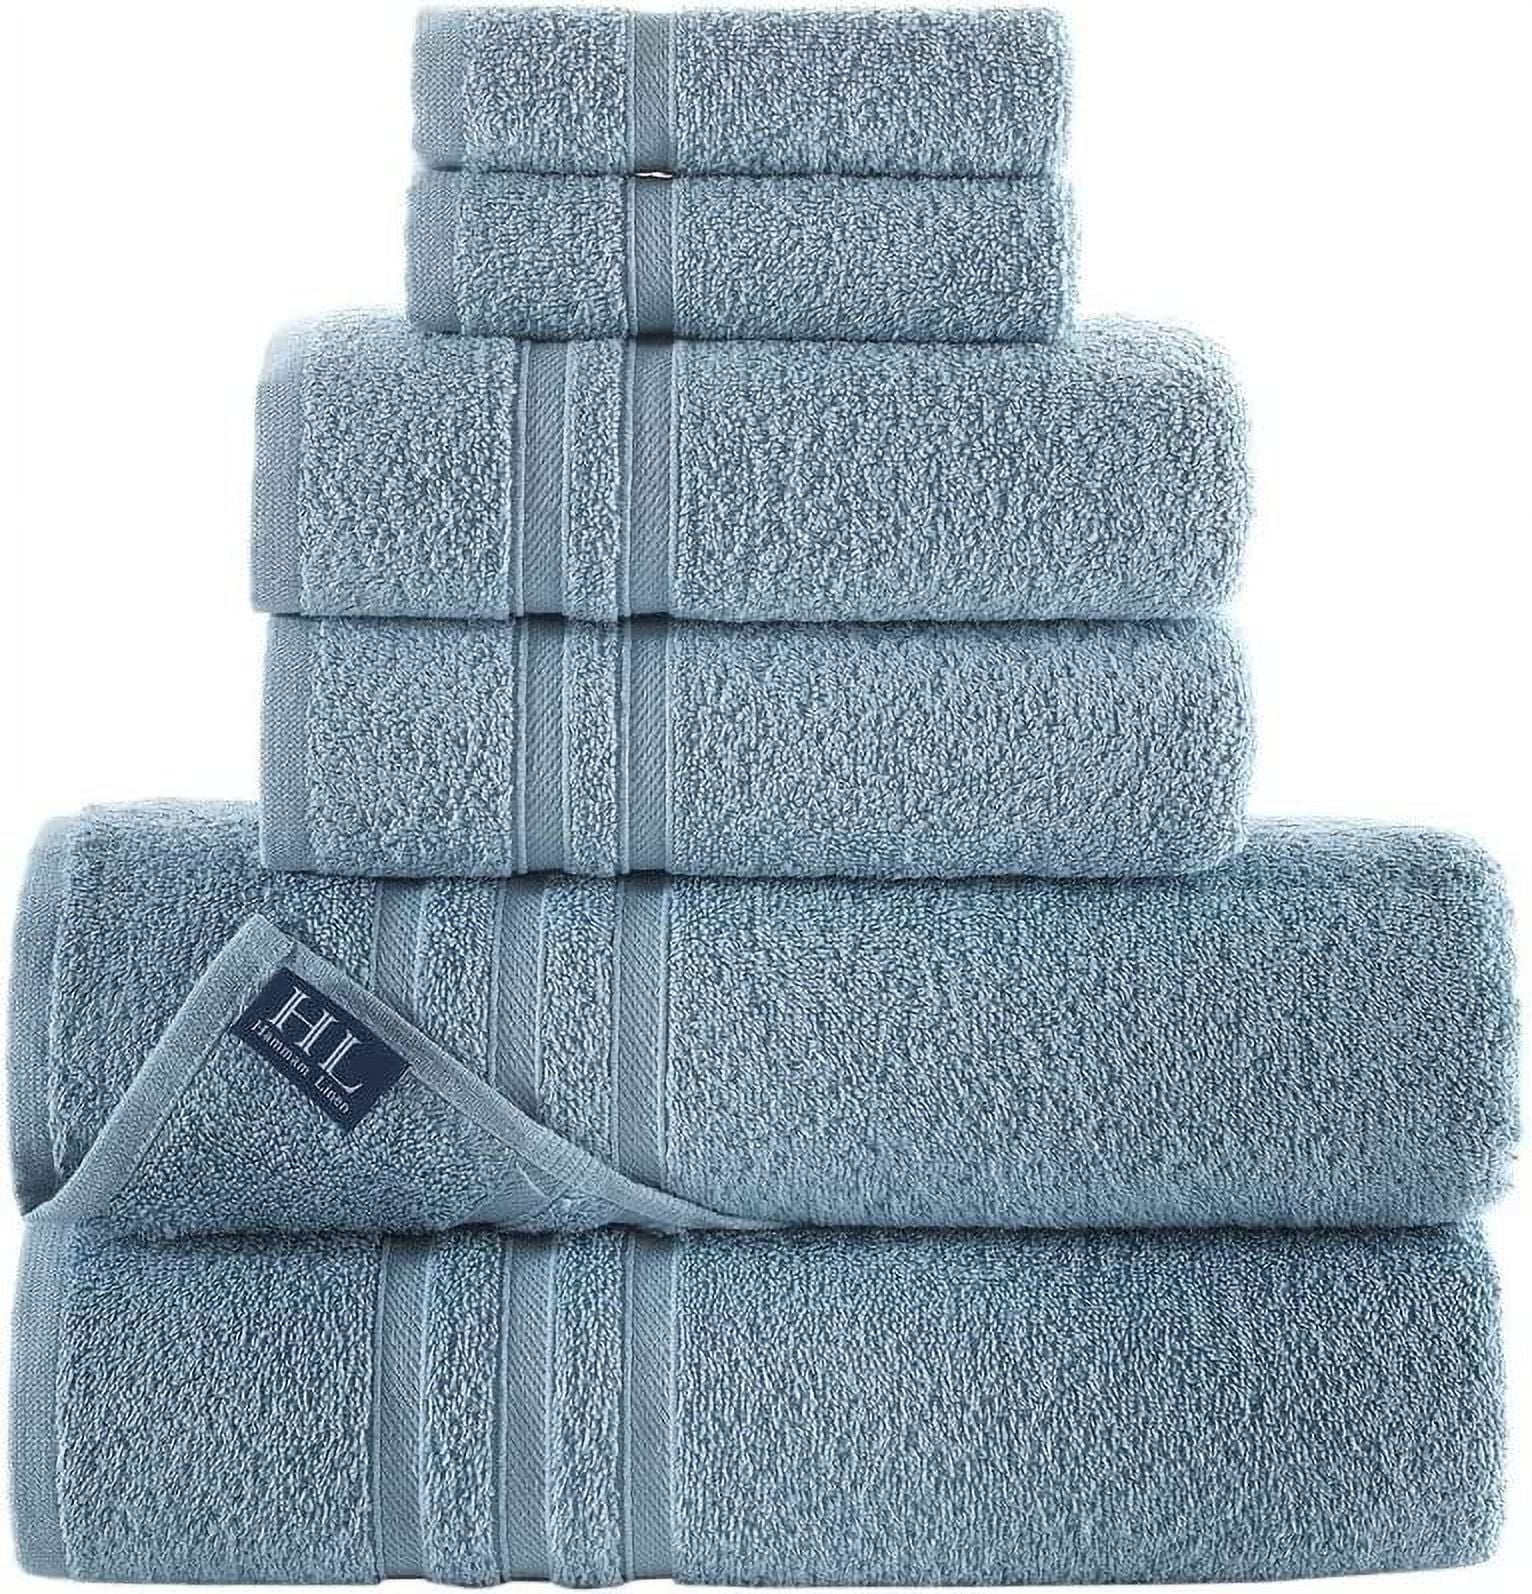 Turkish Cotton Full Bath Towel Set of 6 – La'Hammam